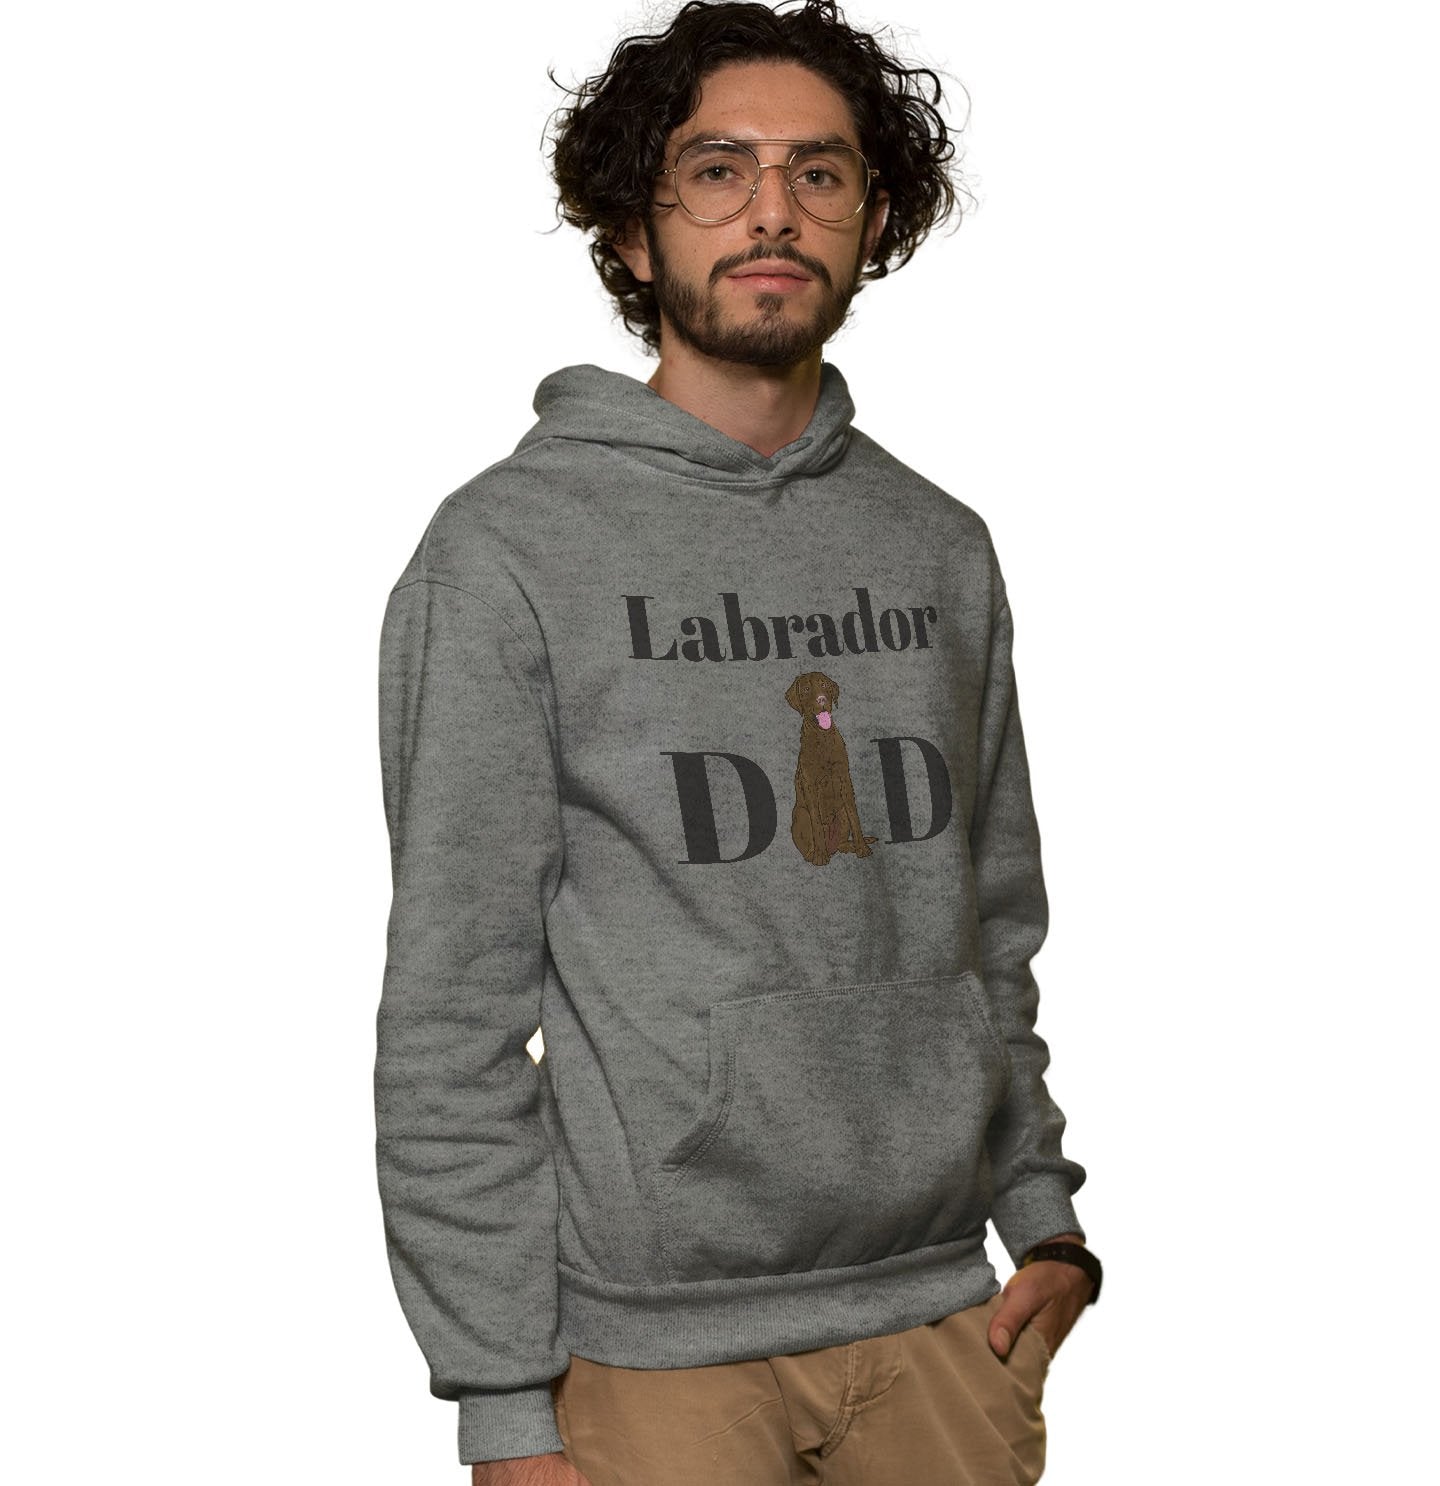 Labradors.com - Chocolate Labrador Dad Illustration - Adult Unisex Hoodie Sweatshirt